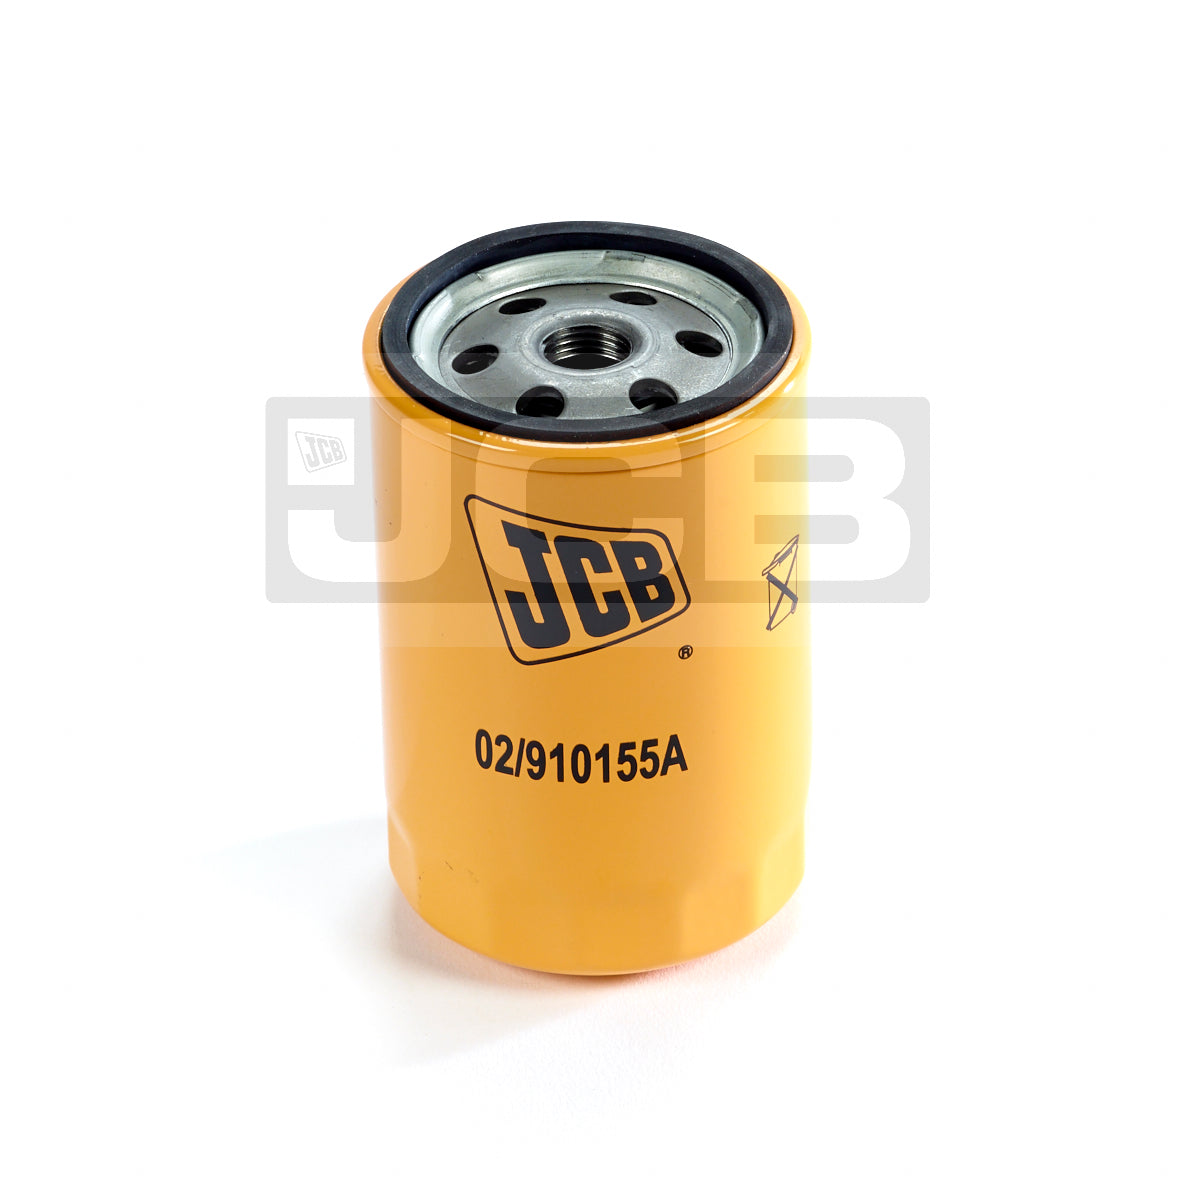 JCB Fuel Filter: 02/910155A